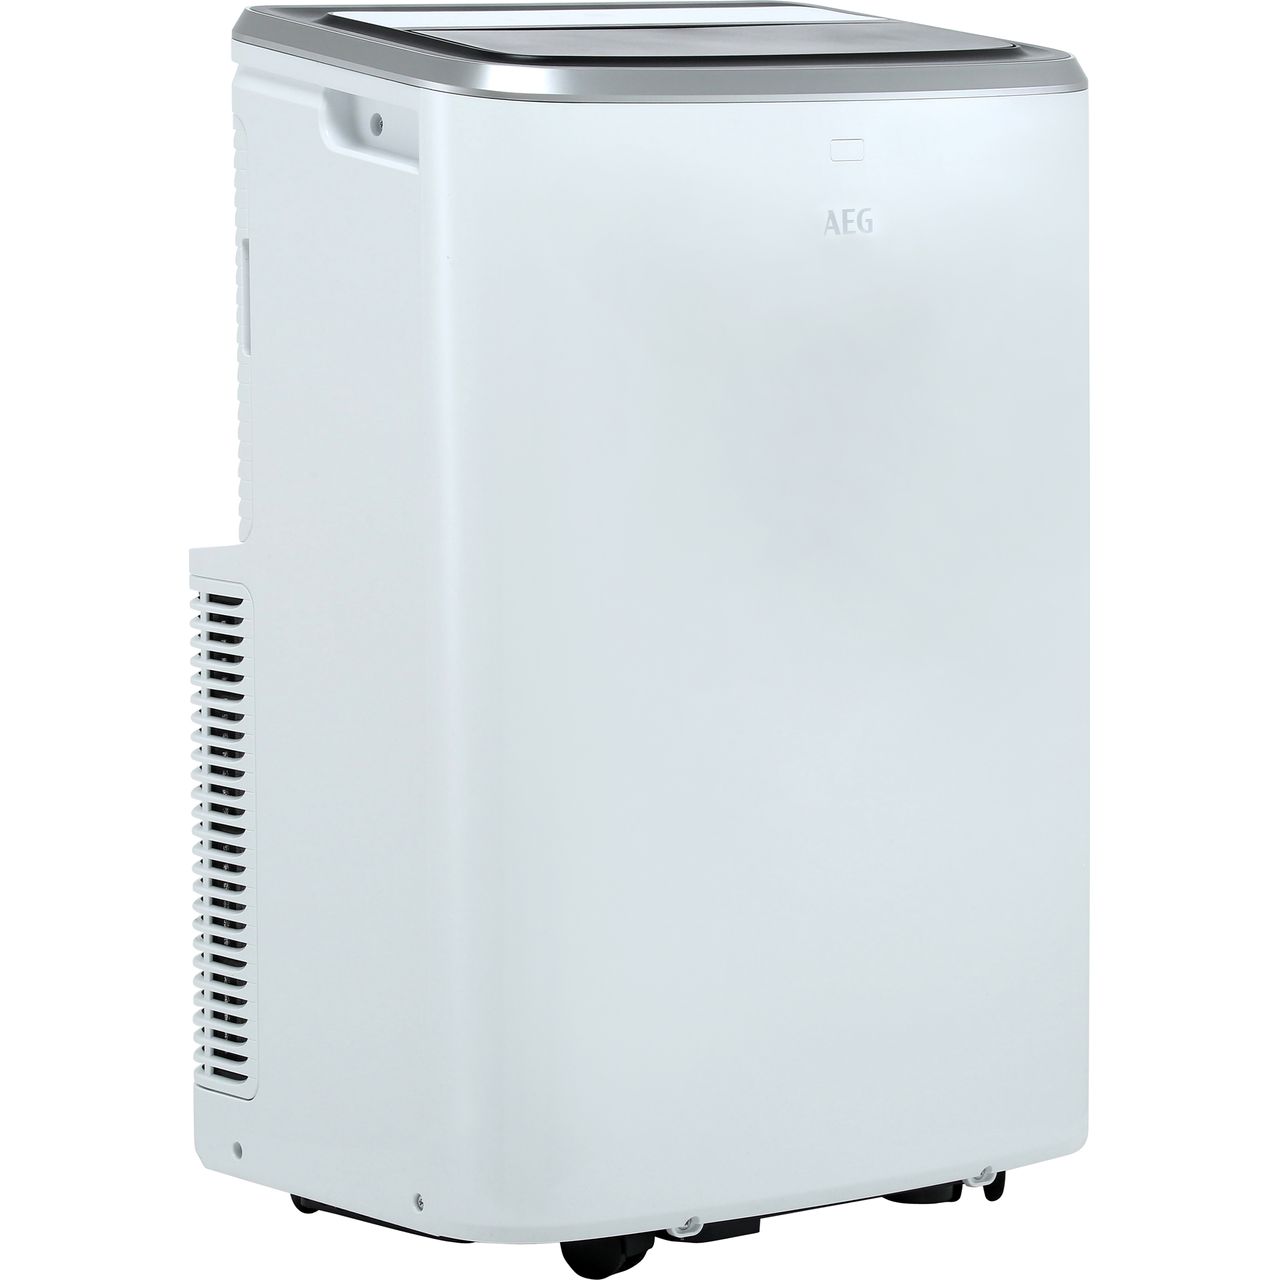 ao.com | AEG ChillFlex Pro AXP26U338CW Air Conditioning Unit - White